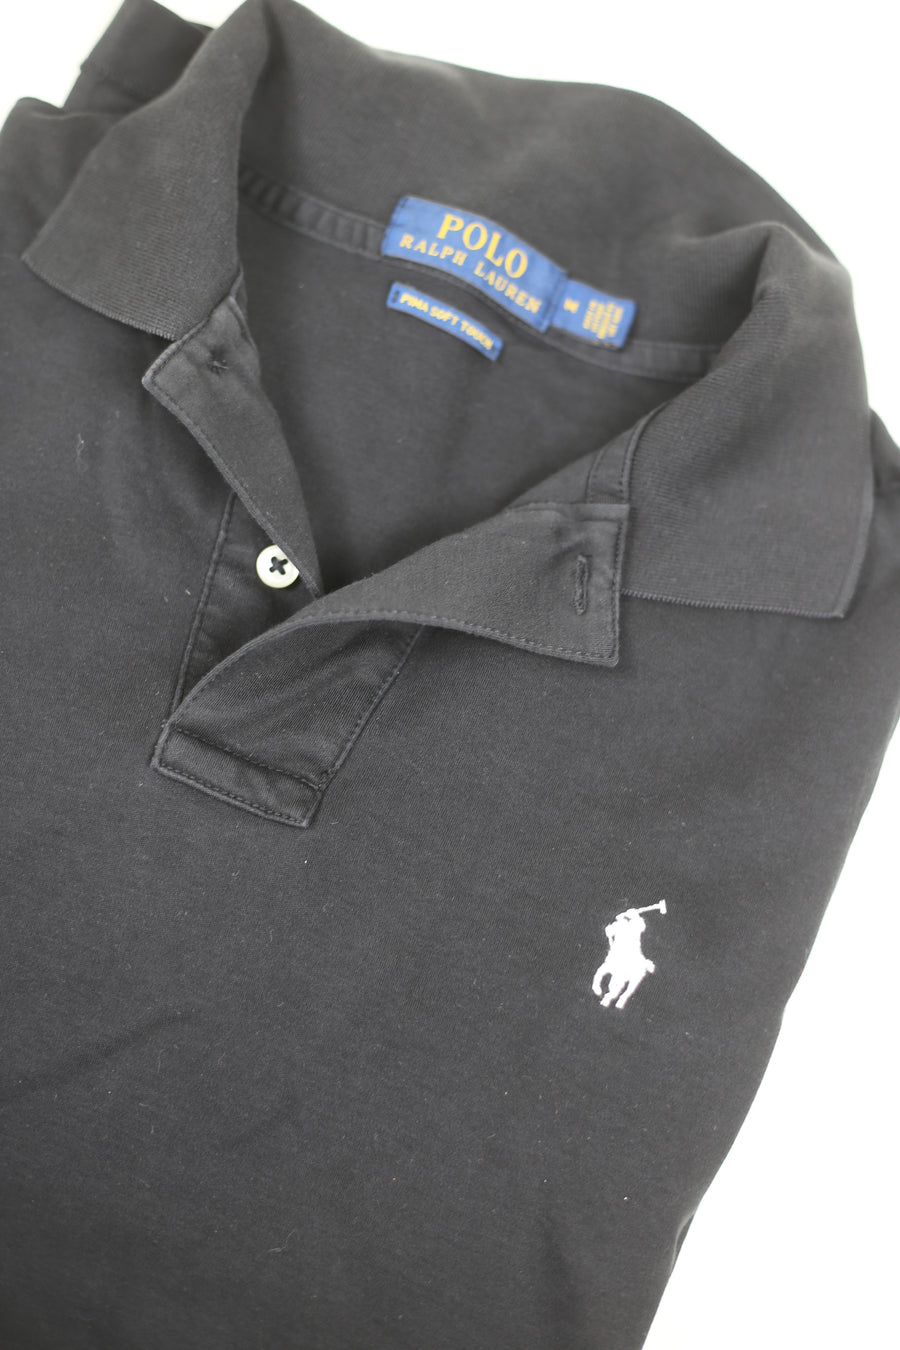 Vintage polo shirt RL - M -